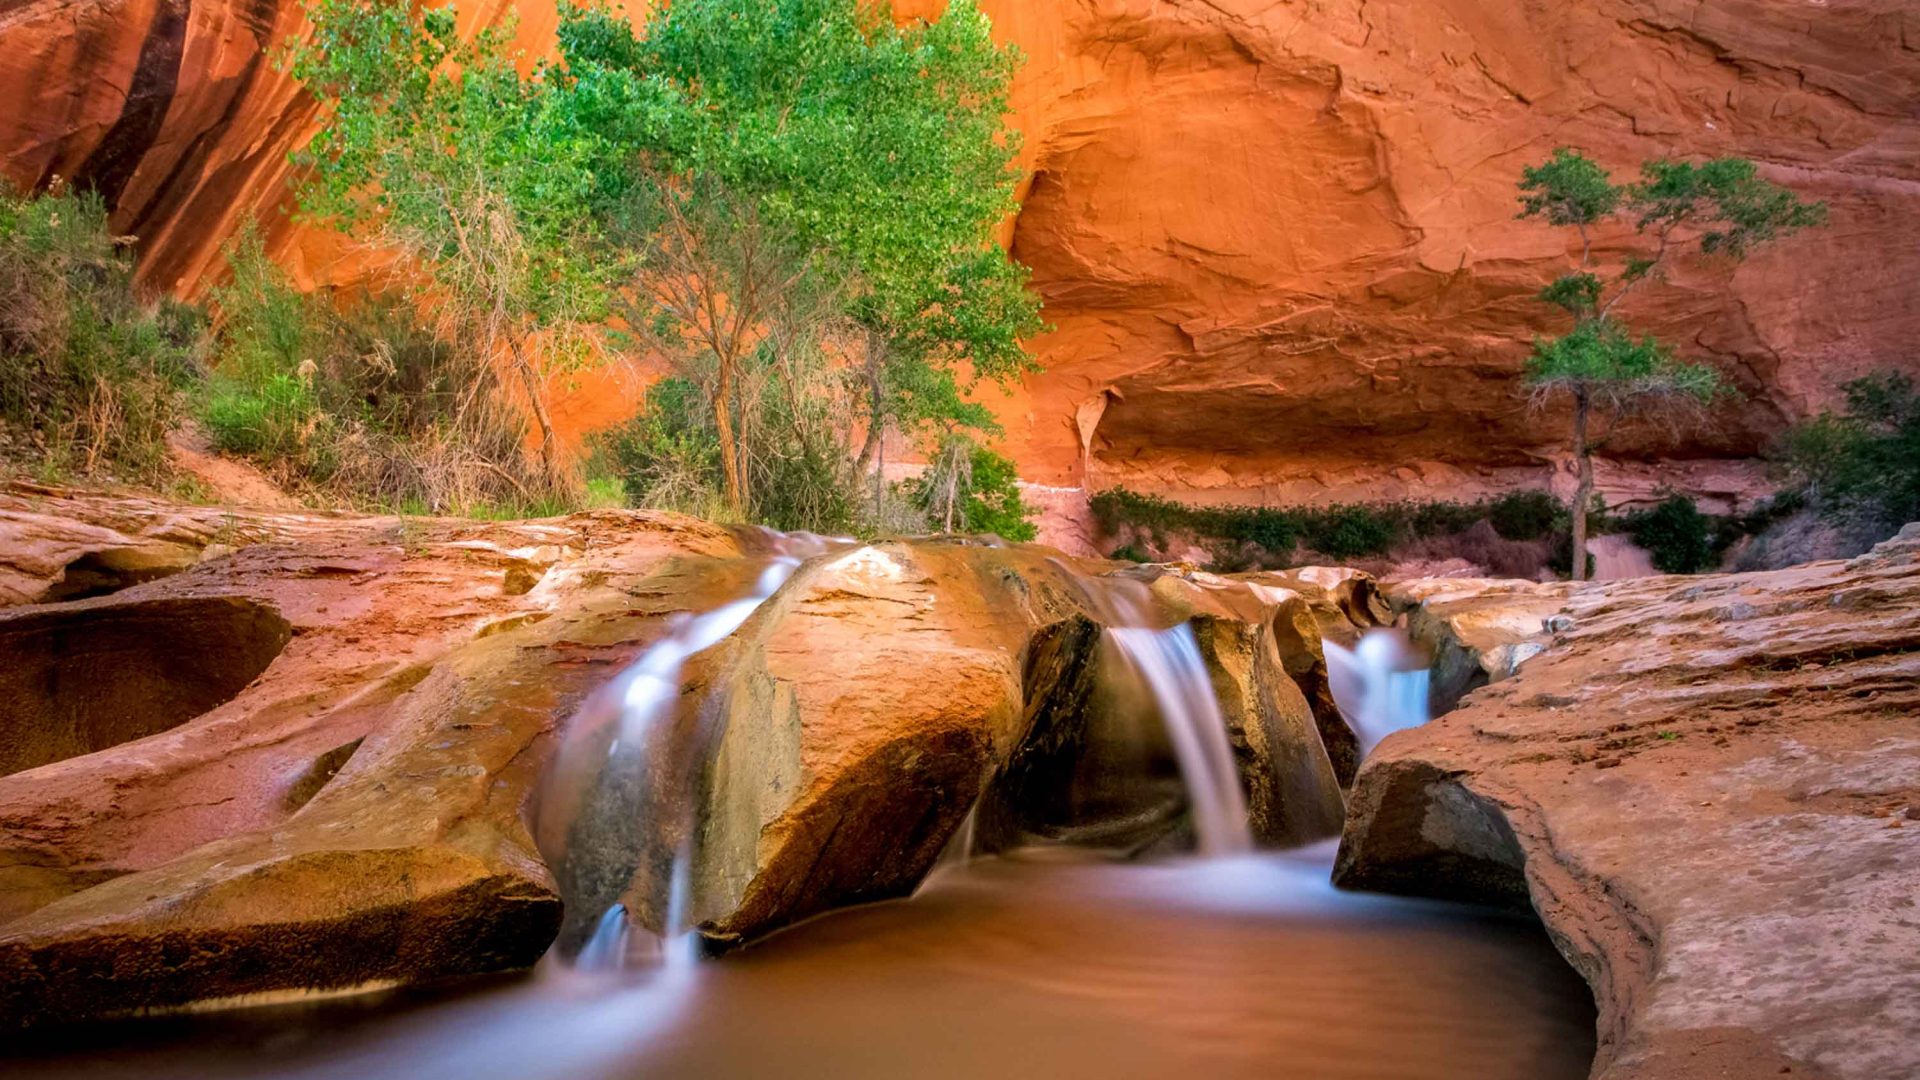 Water cascades through some red rocks.